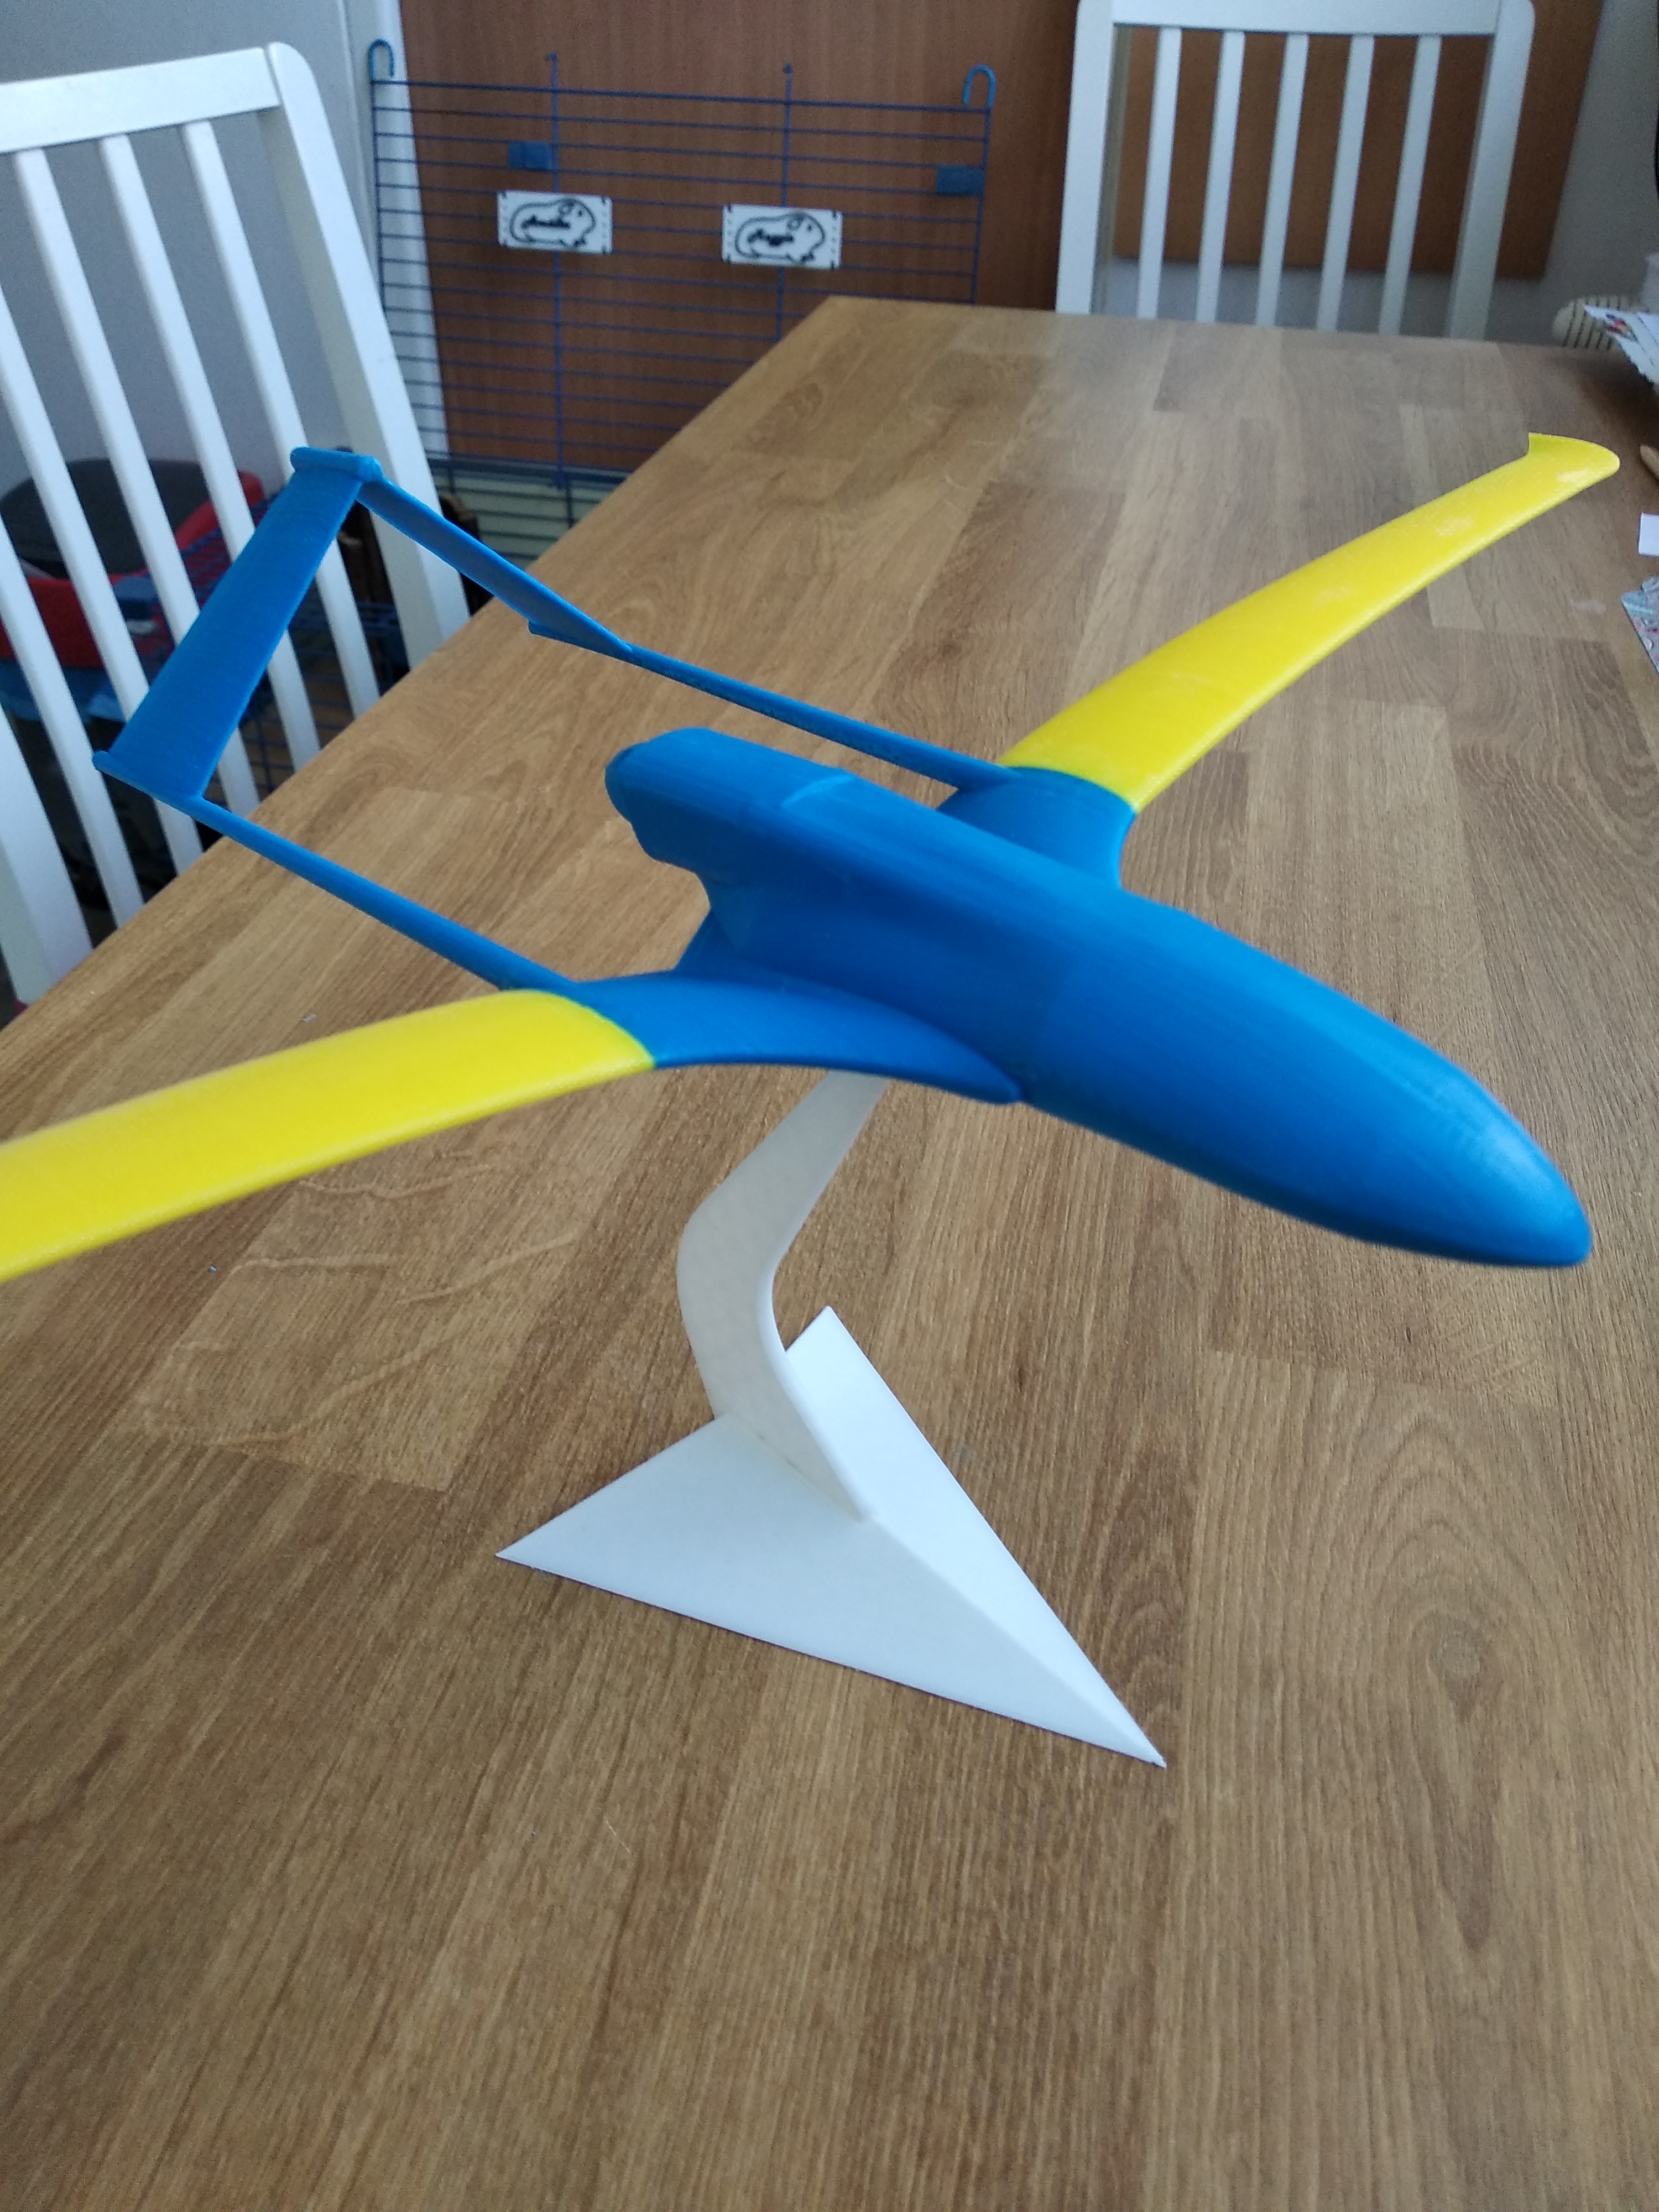 Baykar Bayraktar TB2 - Drone model